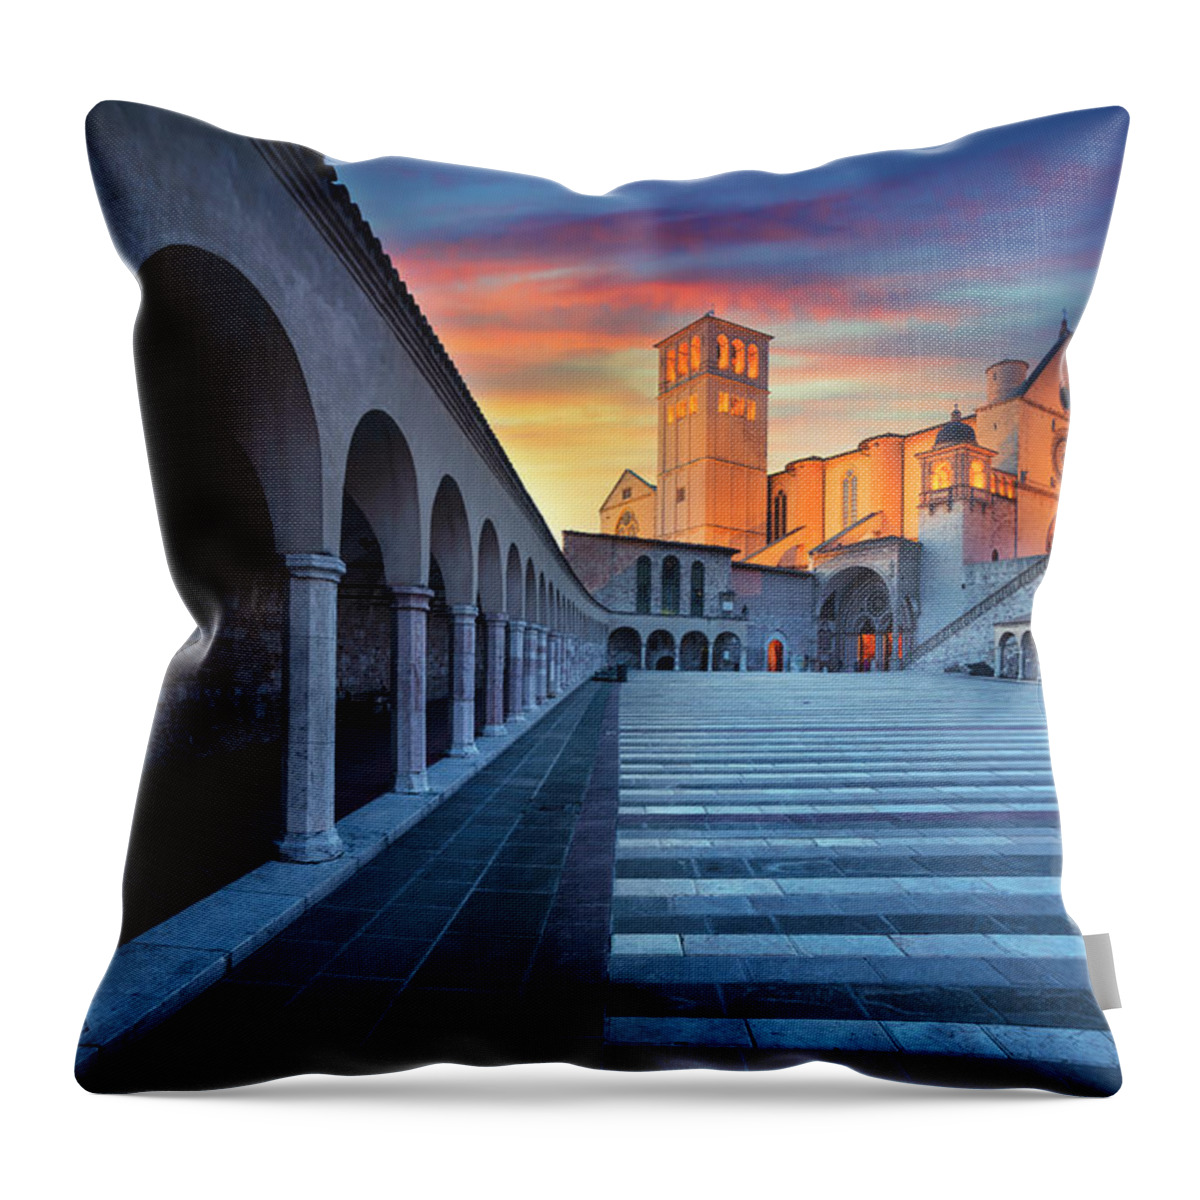 Assisi Throw Pillow featuring the photograph Assisi, San Francesco Basilica Sunset by Stefano Orazzini